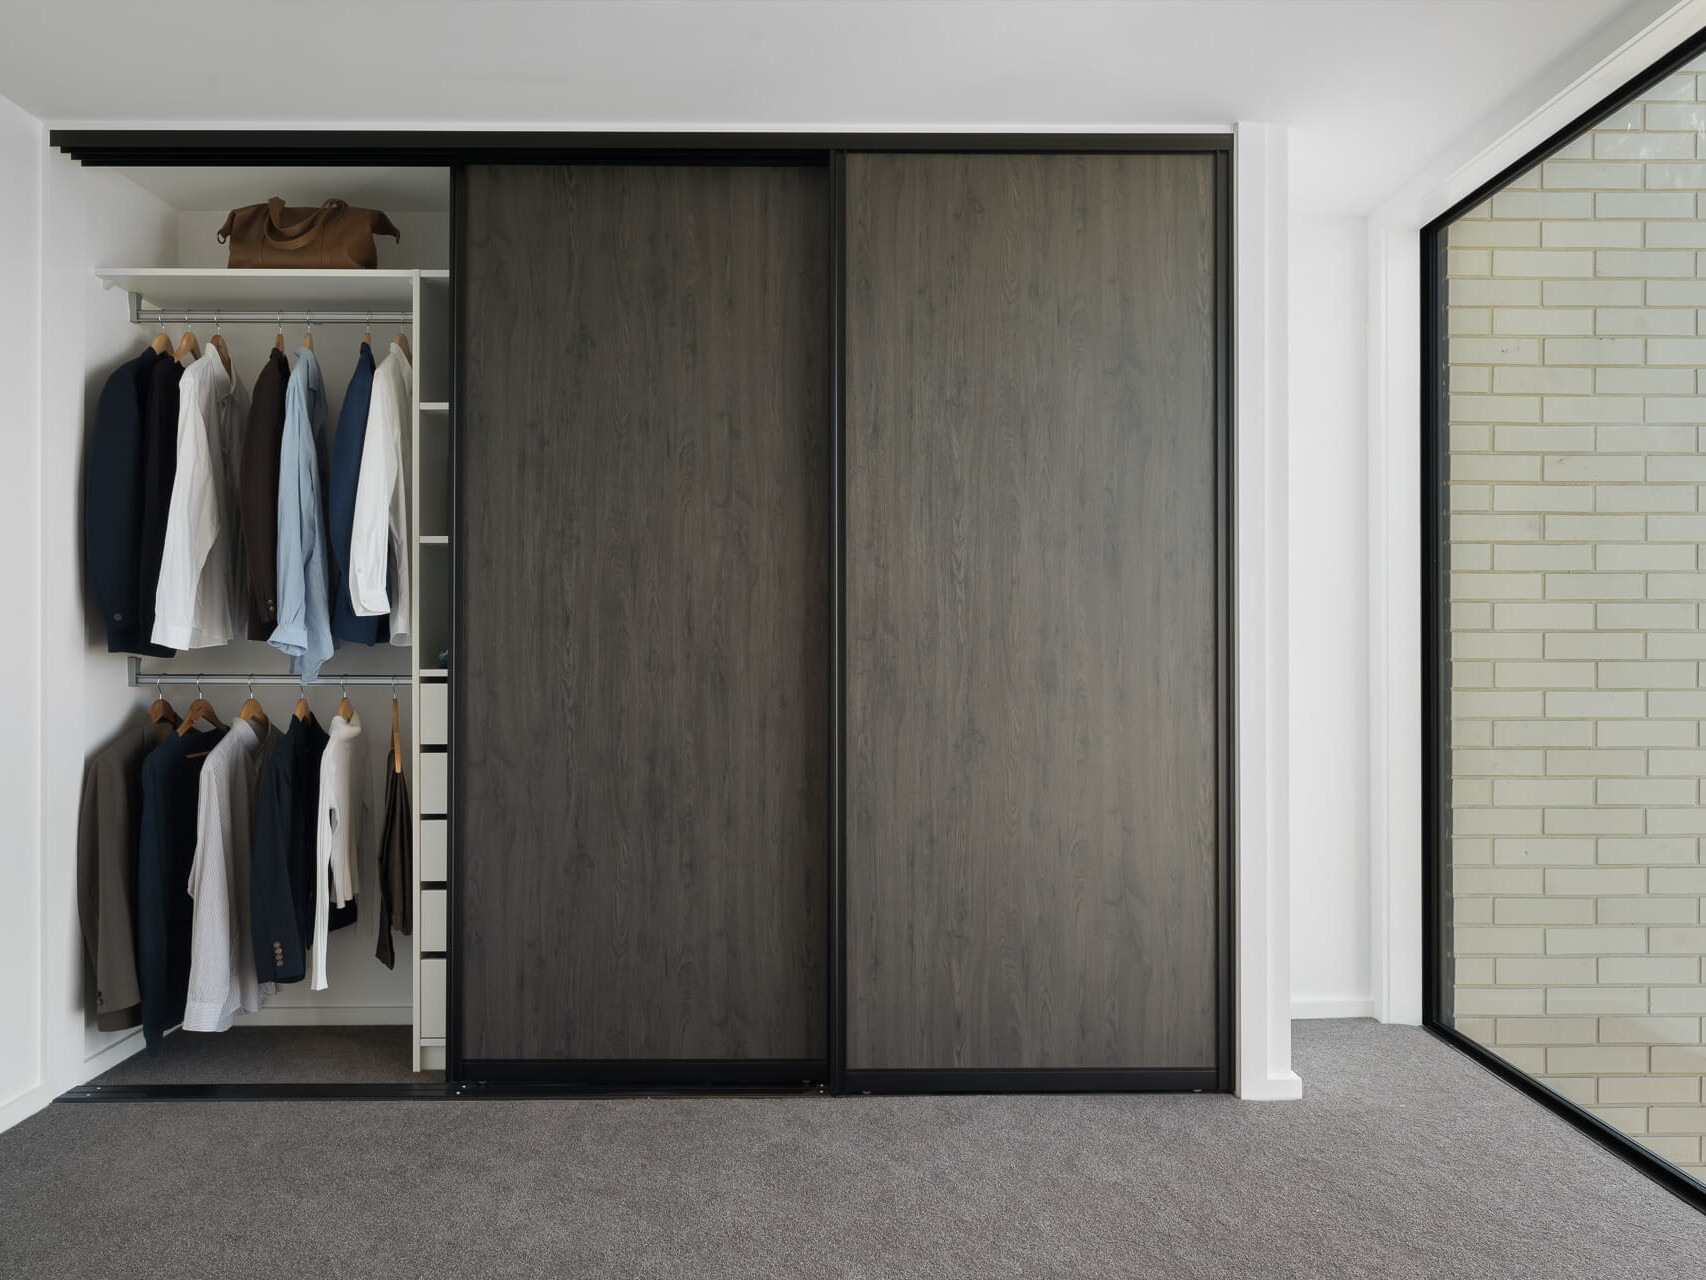 Aristo sliding wardrobe doors and Flex reach-in wardrobe organsier